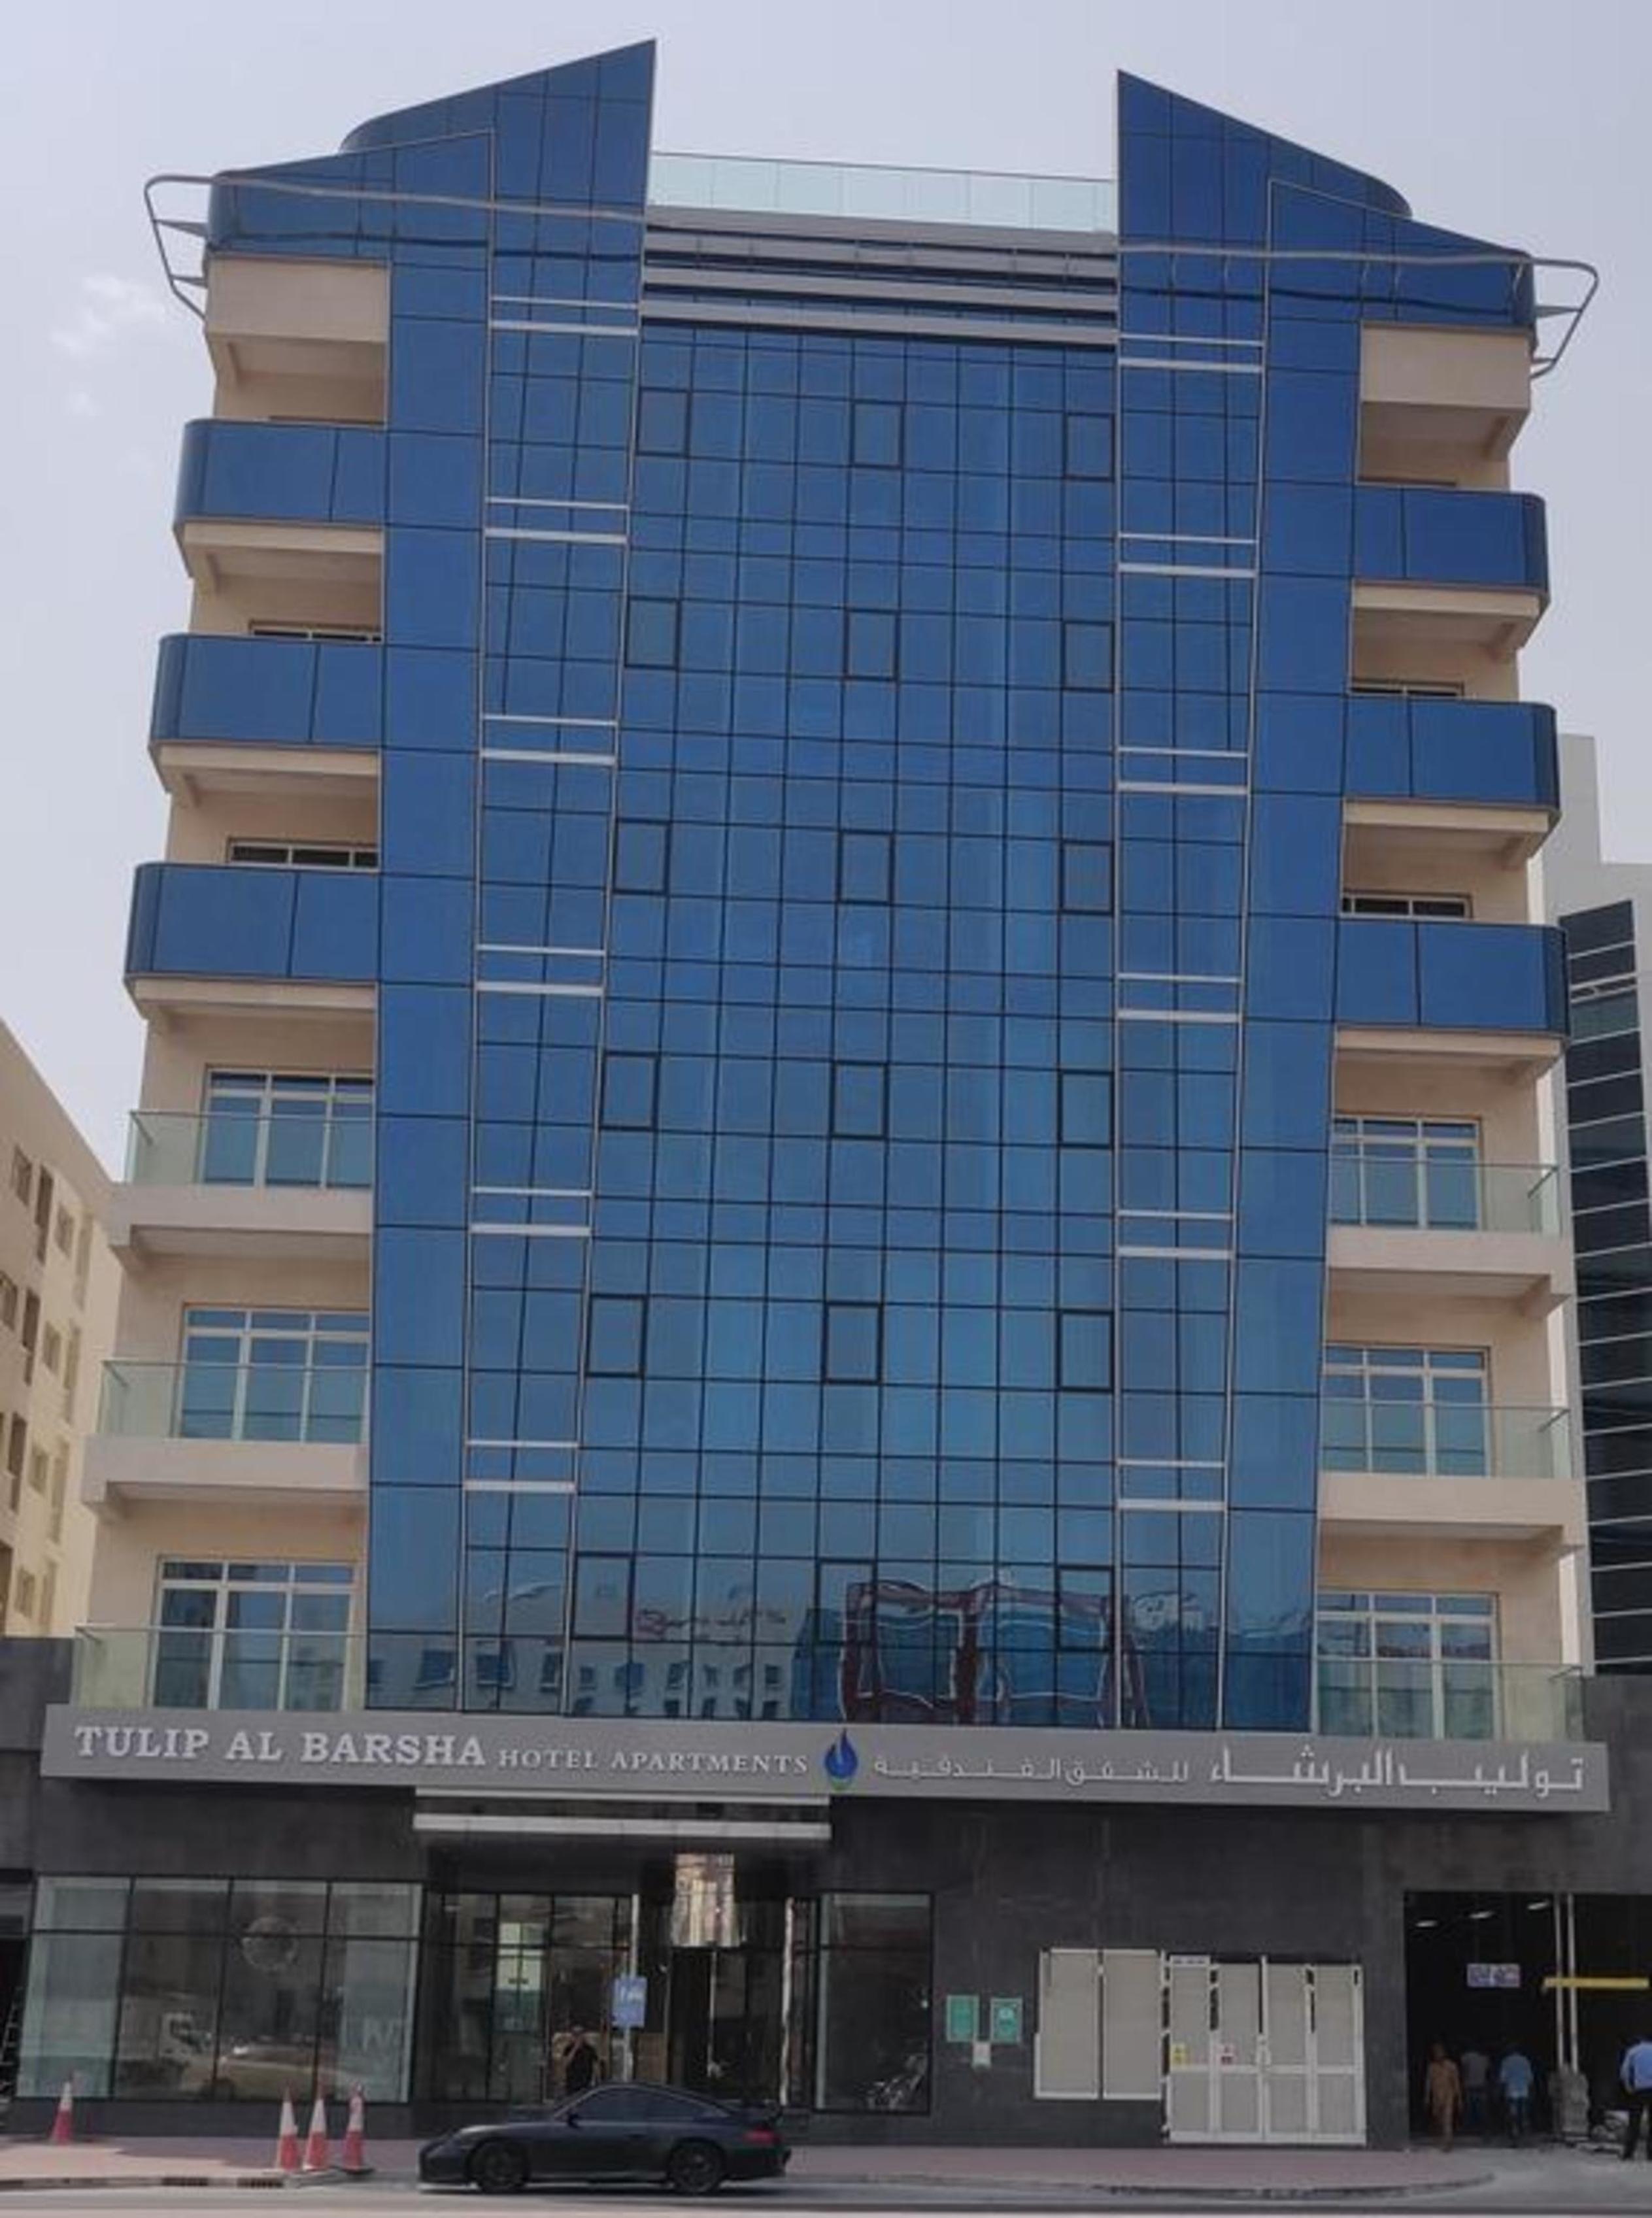 Vista da fachada Tulip Al Barsha Hotel Apartments